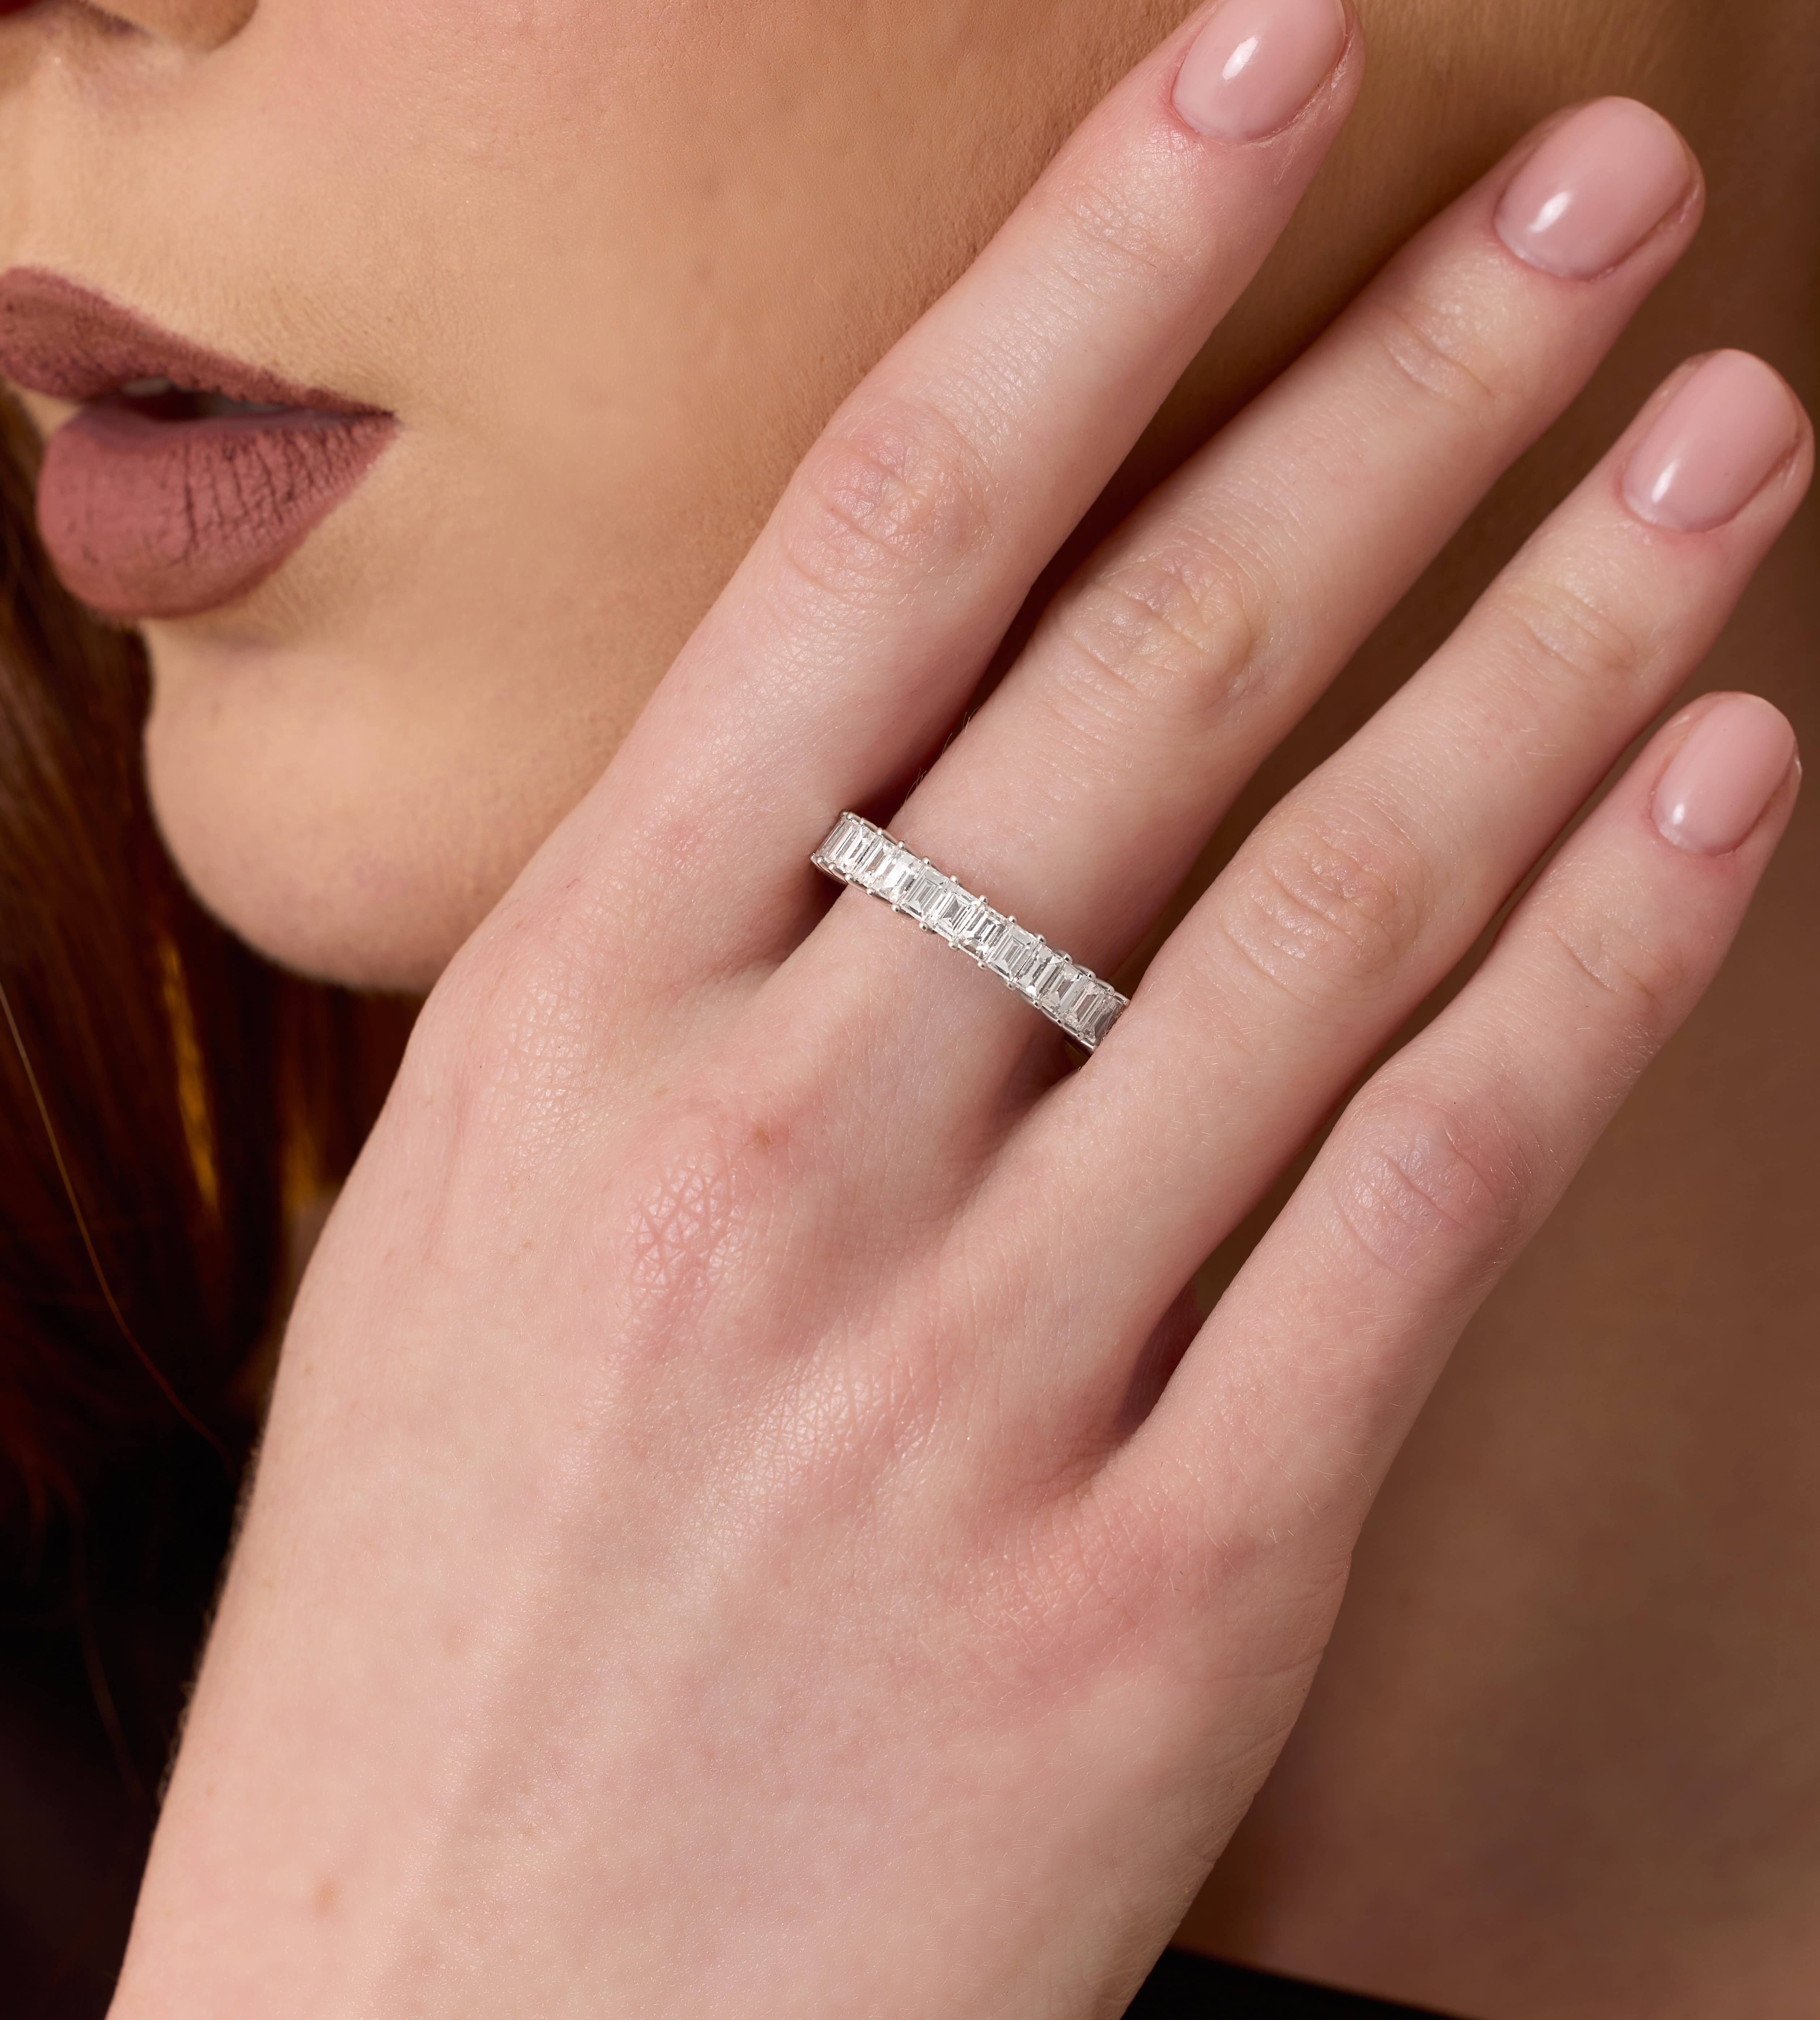 Baguette Diamond 2.64ct Eternity Ring